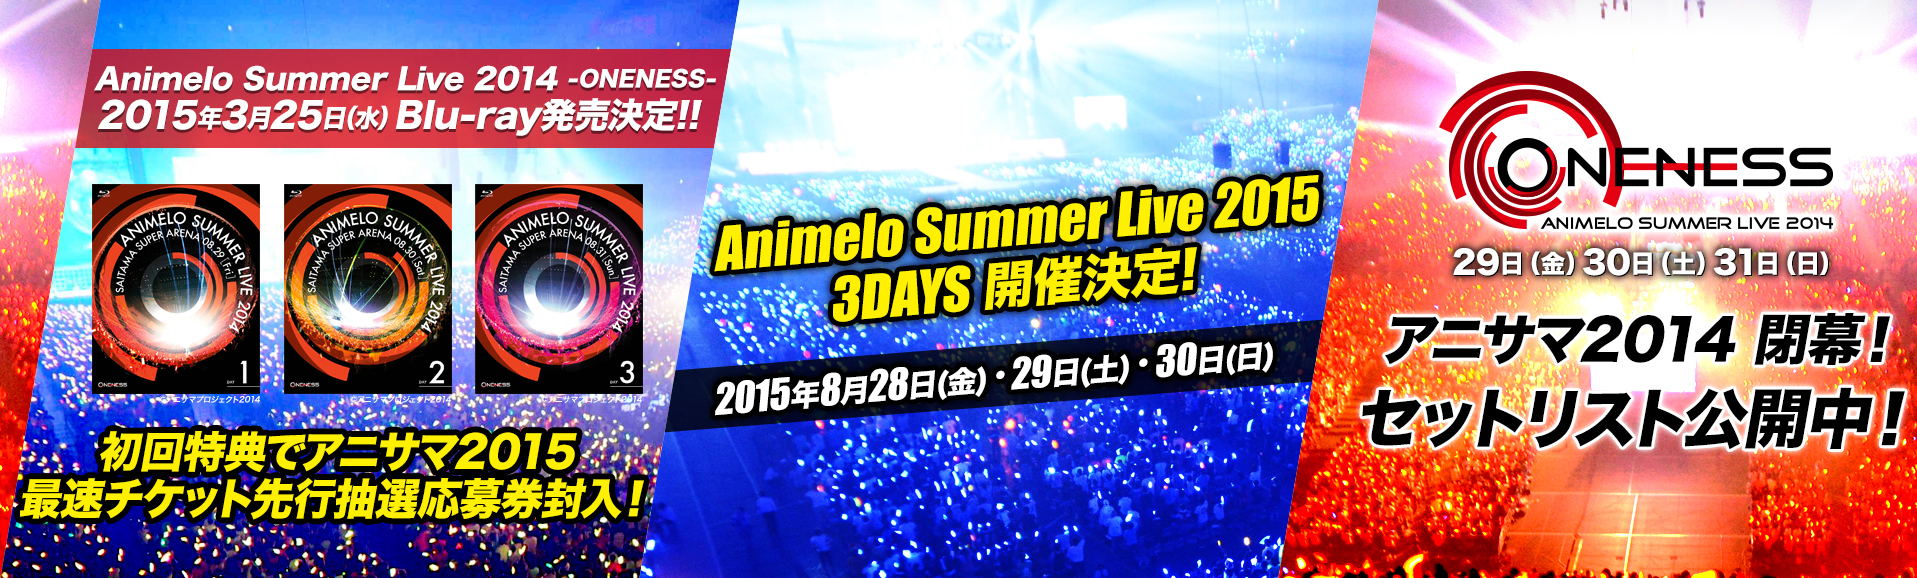 Animelo Summer Live 2014 Oneness アニメロサマーライブ2014